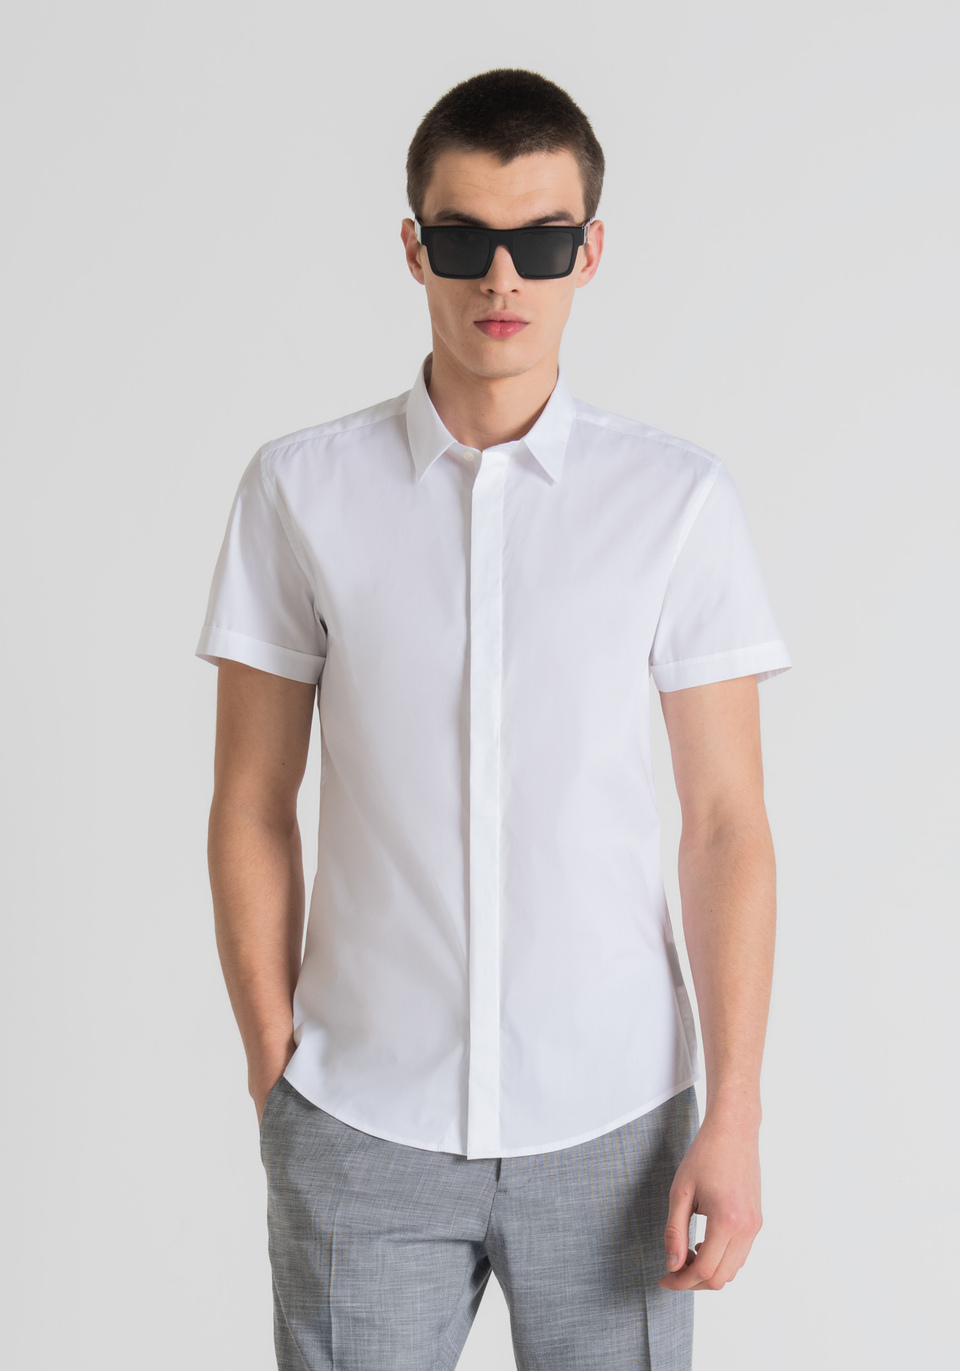 Slim-fit shirt in plain hues - Antony Morato Online Shop